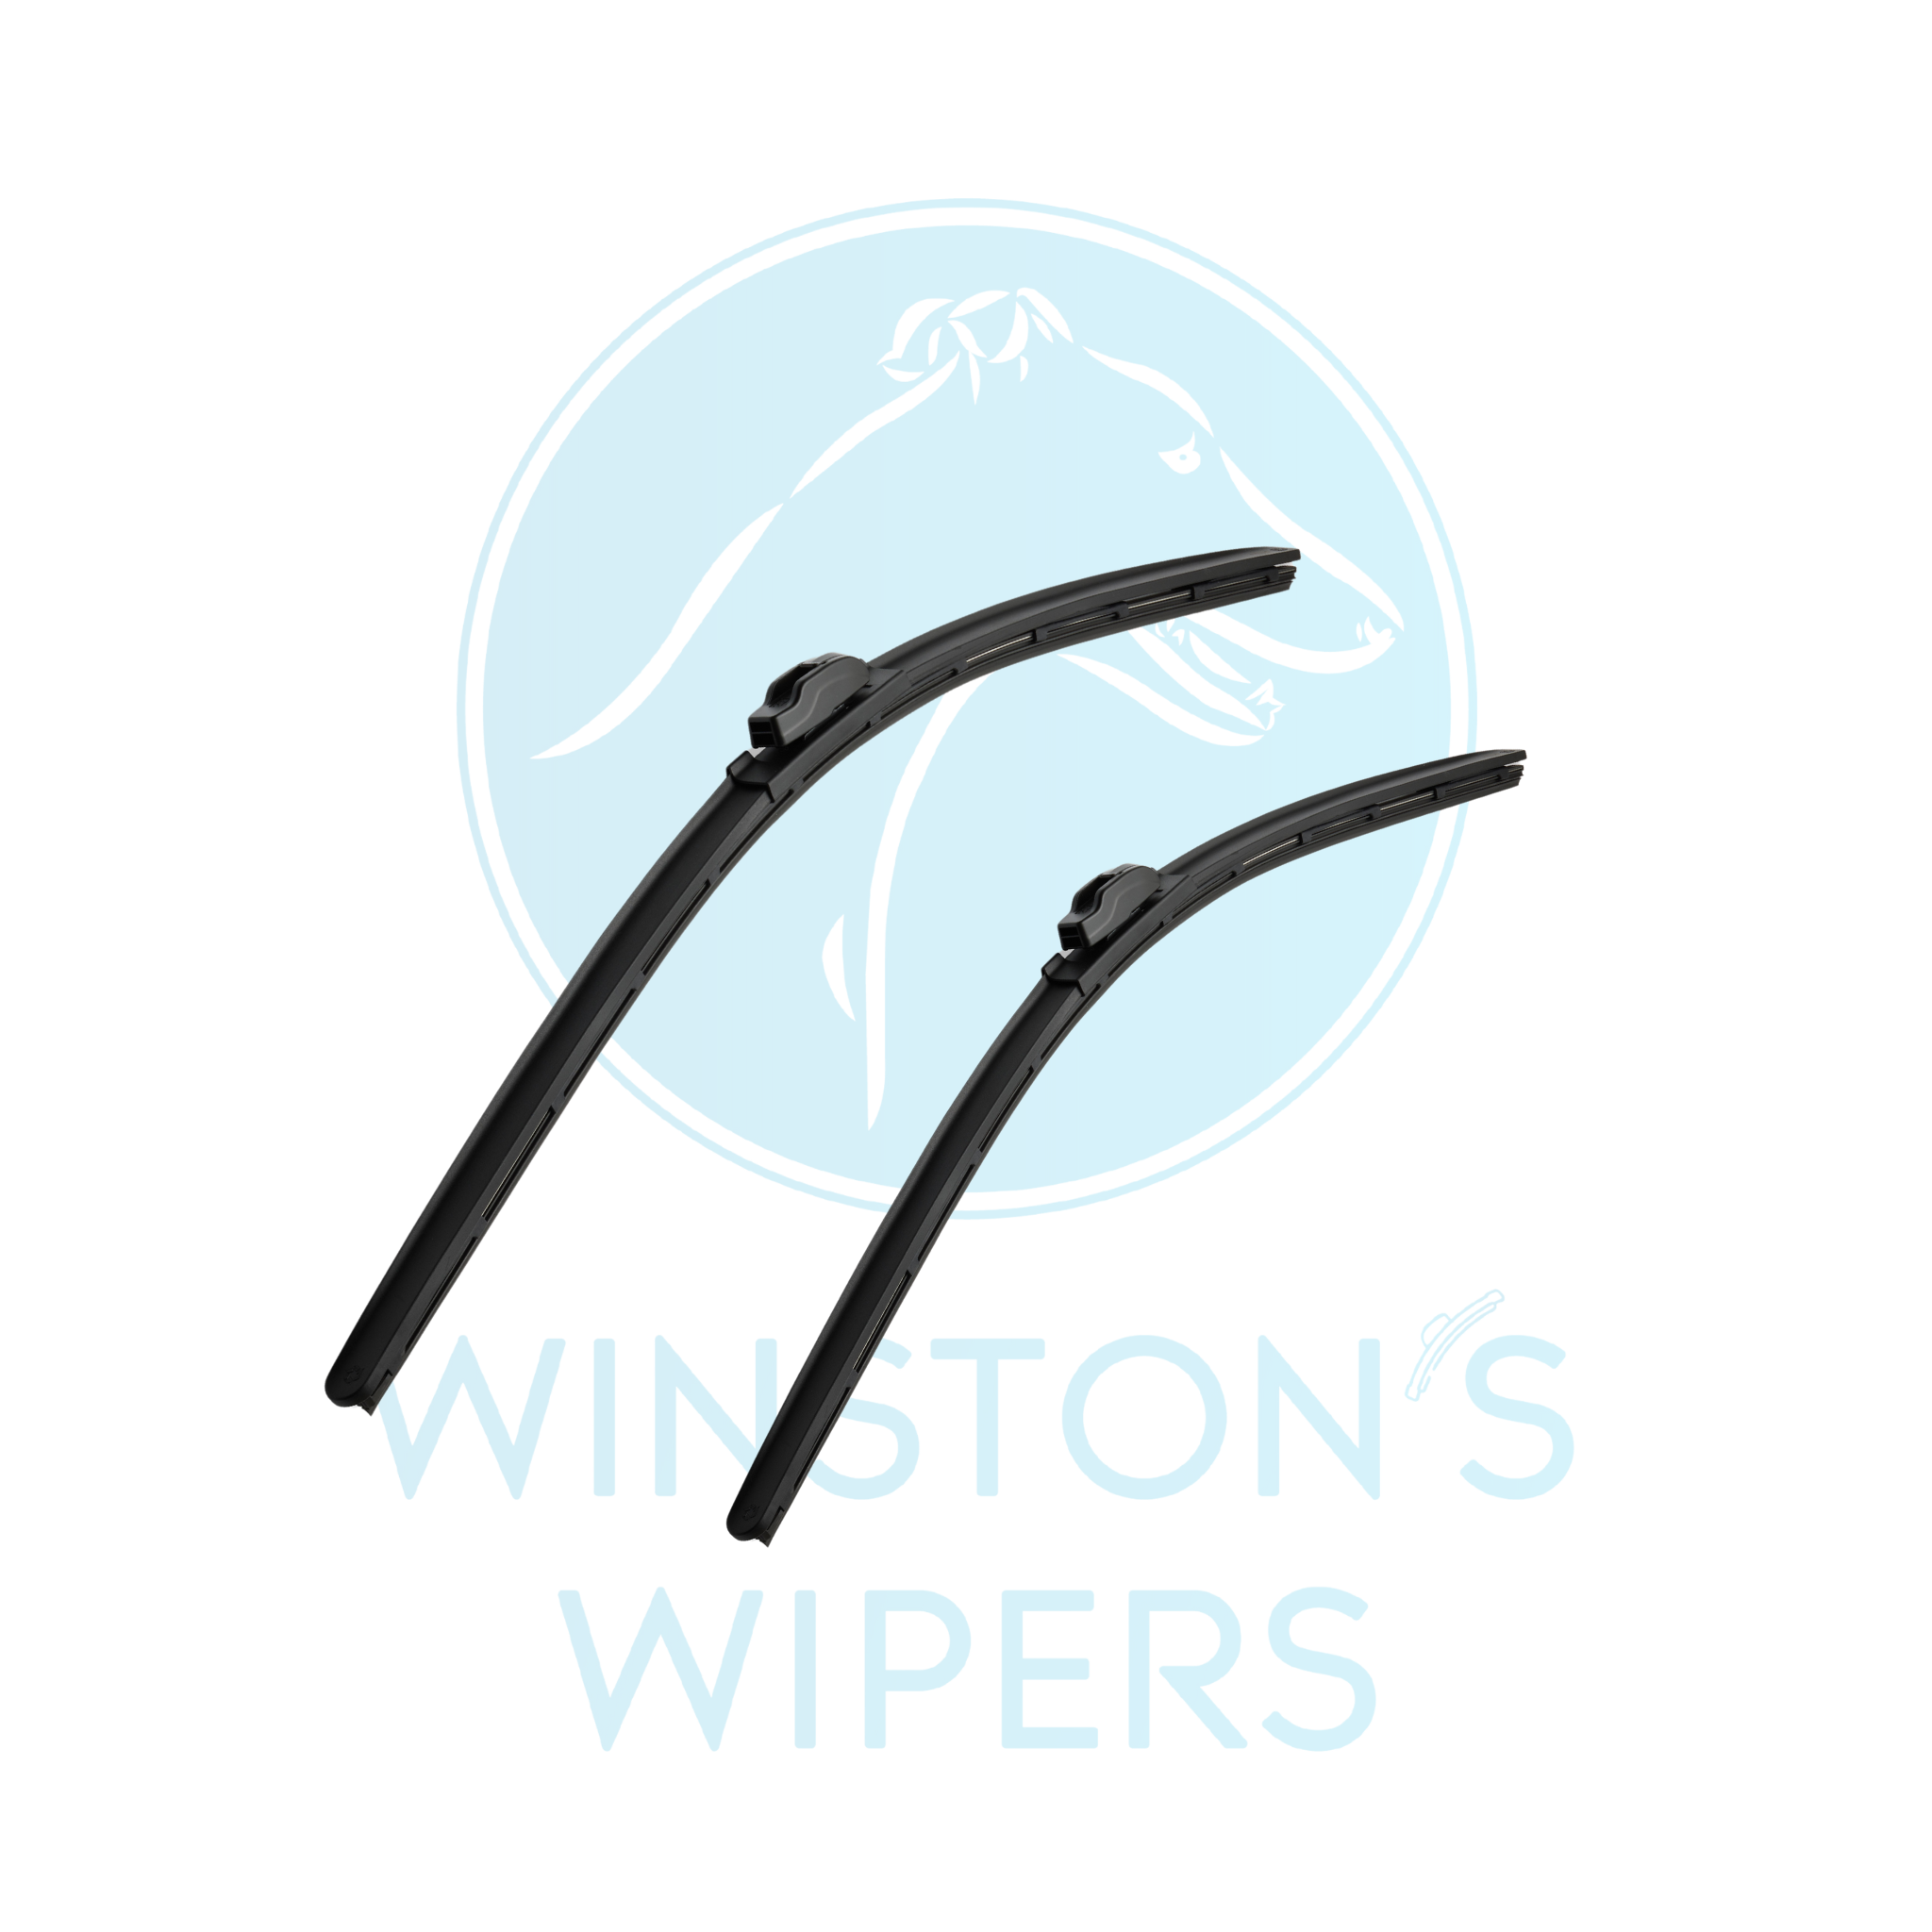 Winston's Aeroblade Wipers To Suit Toyota Landcruiser 300 Series